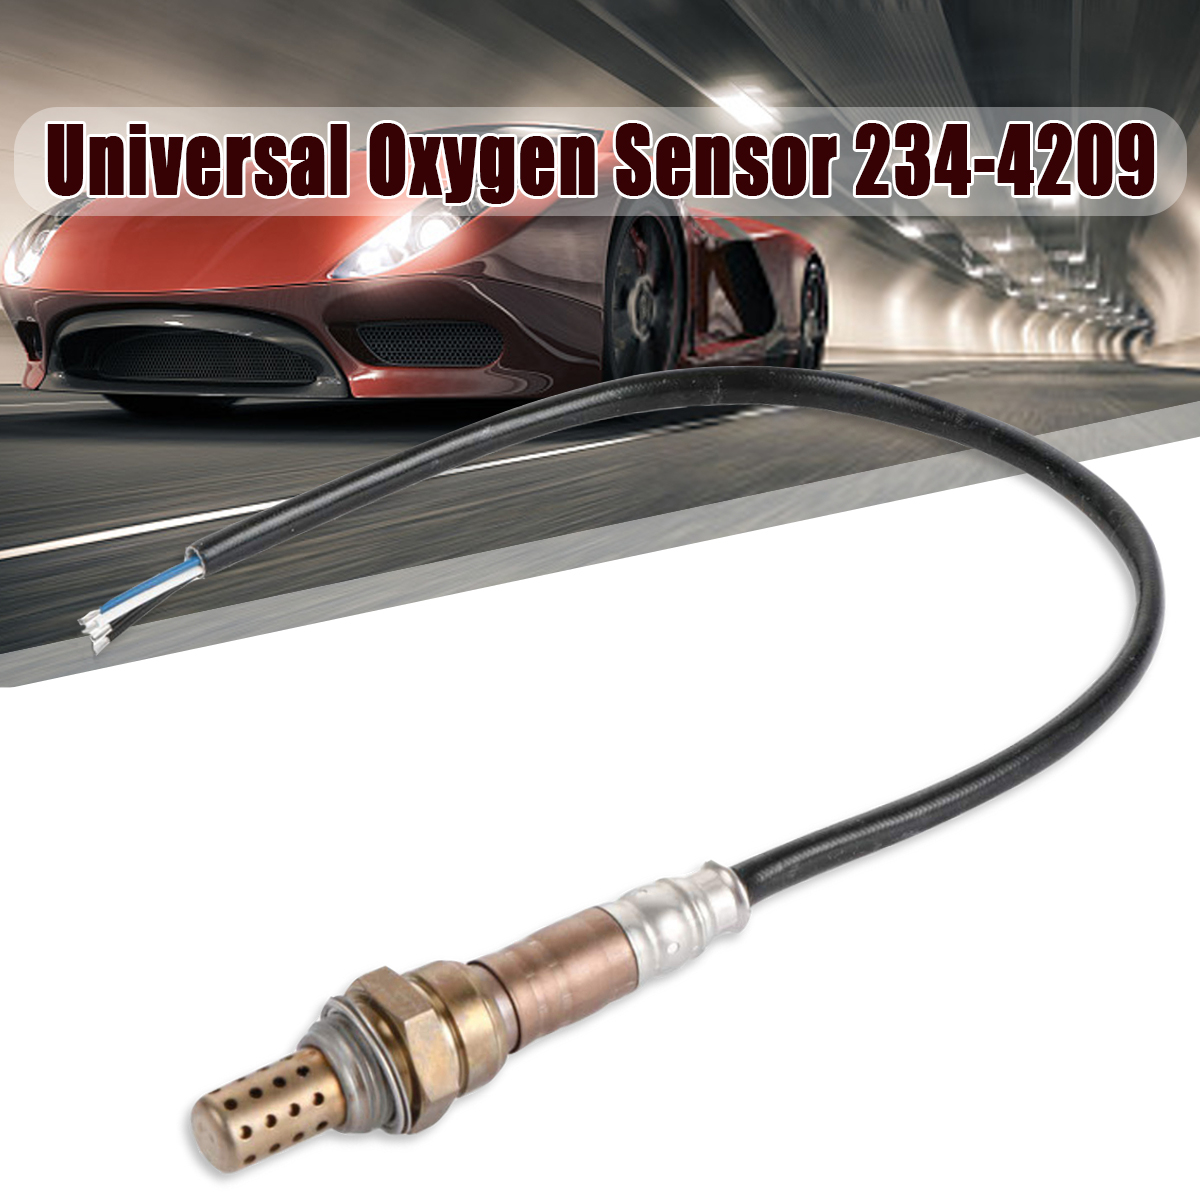 Oxygen-Sensor-Replacement-4-Wire-Universal-234-4209-For-Toyota-Camry-RAV4-Lexus-1536716